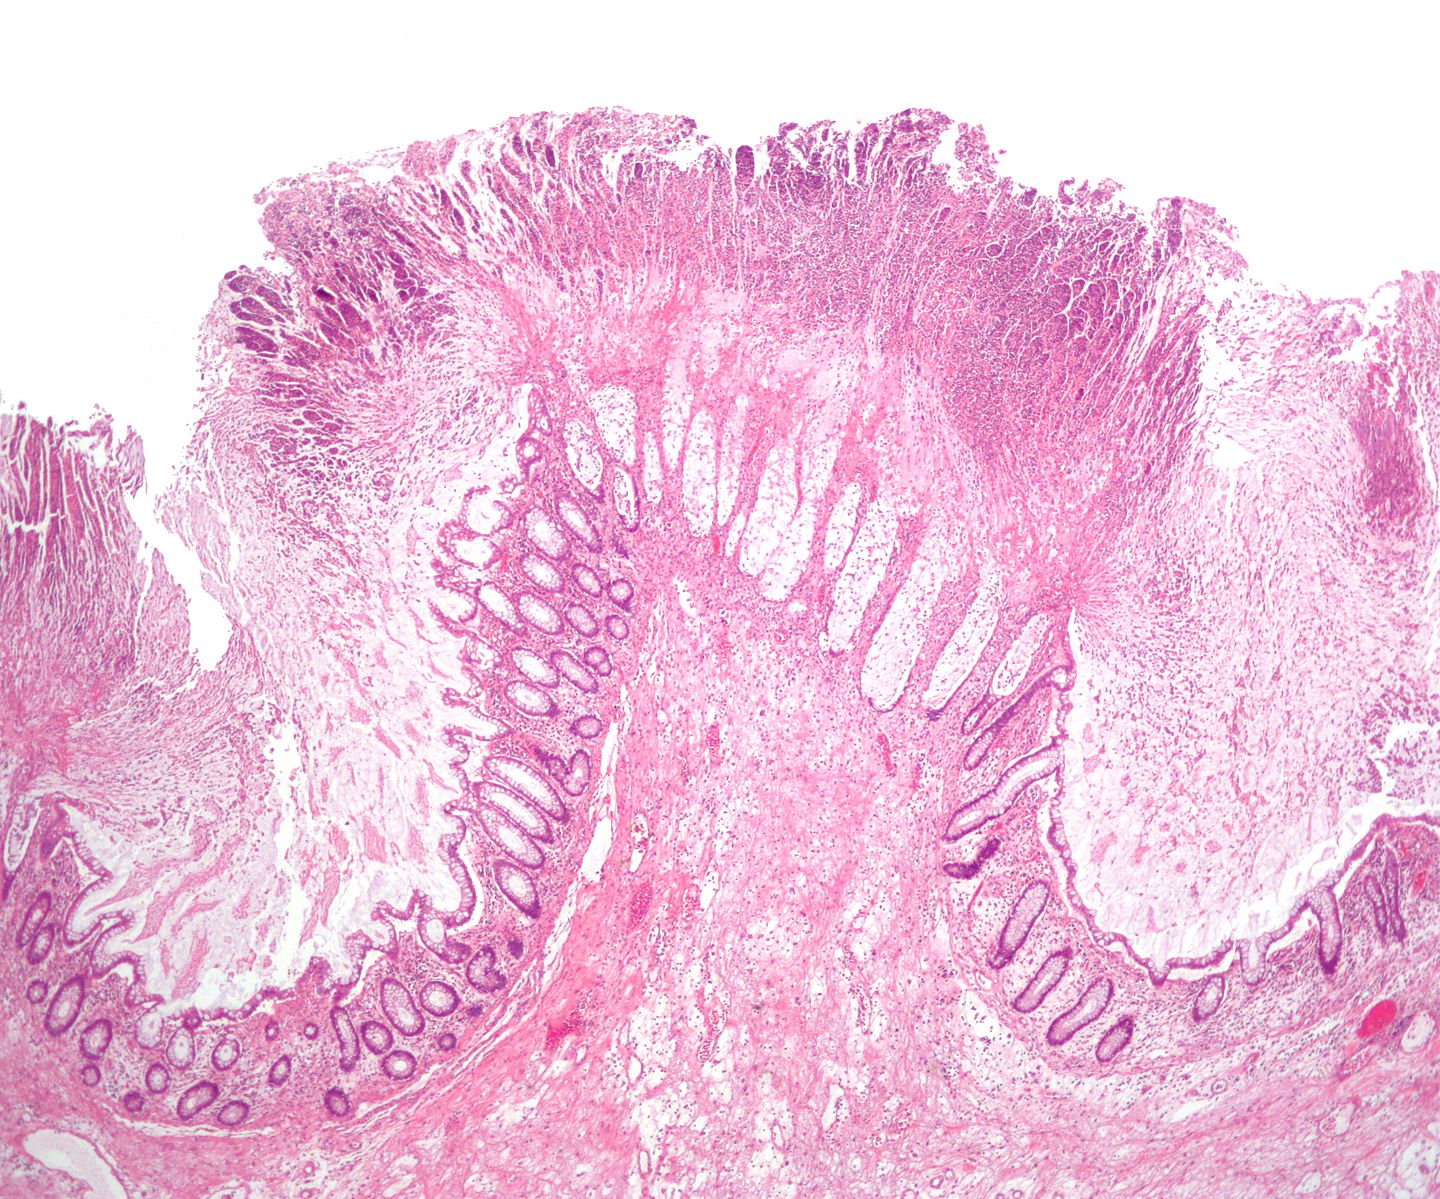 Pseudomembranous colitis. H& E staining showing pseudomembranes in Clostridium colitis [44]